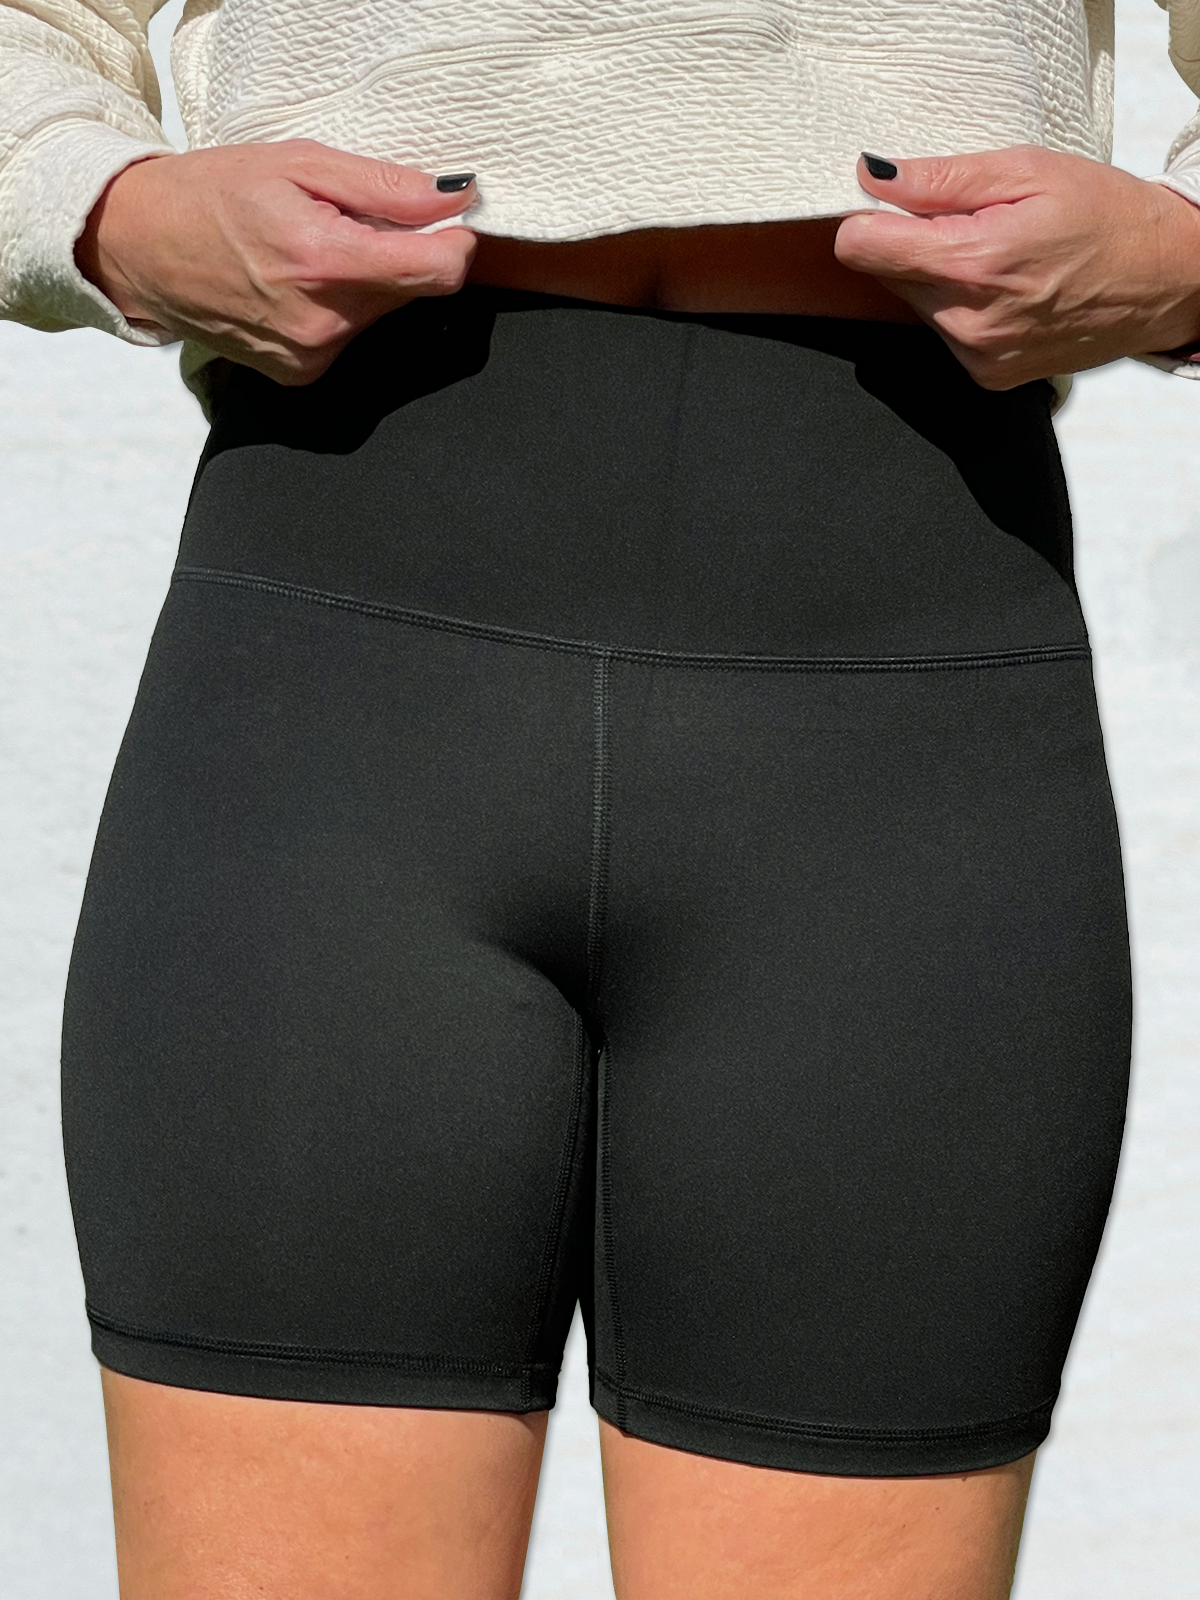 The Olivia Black Biker Short